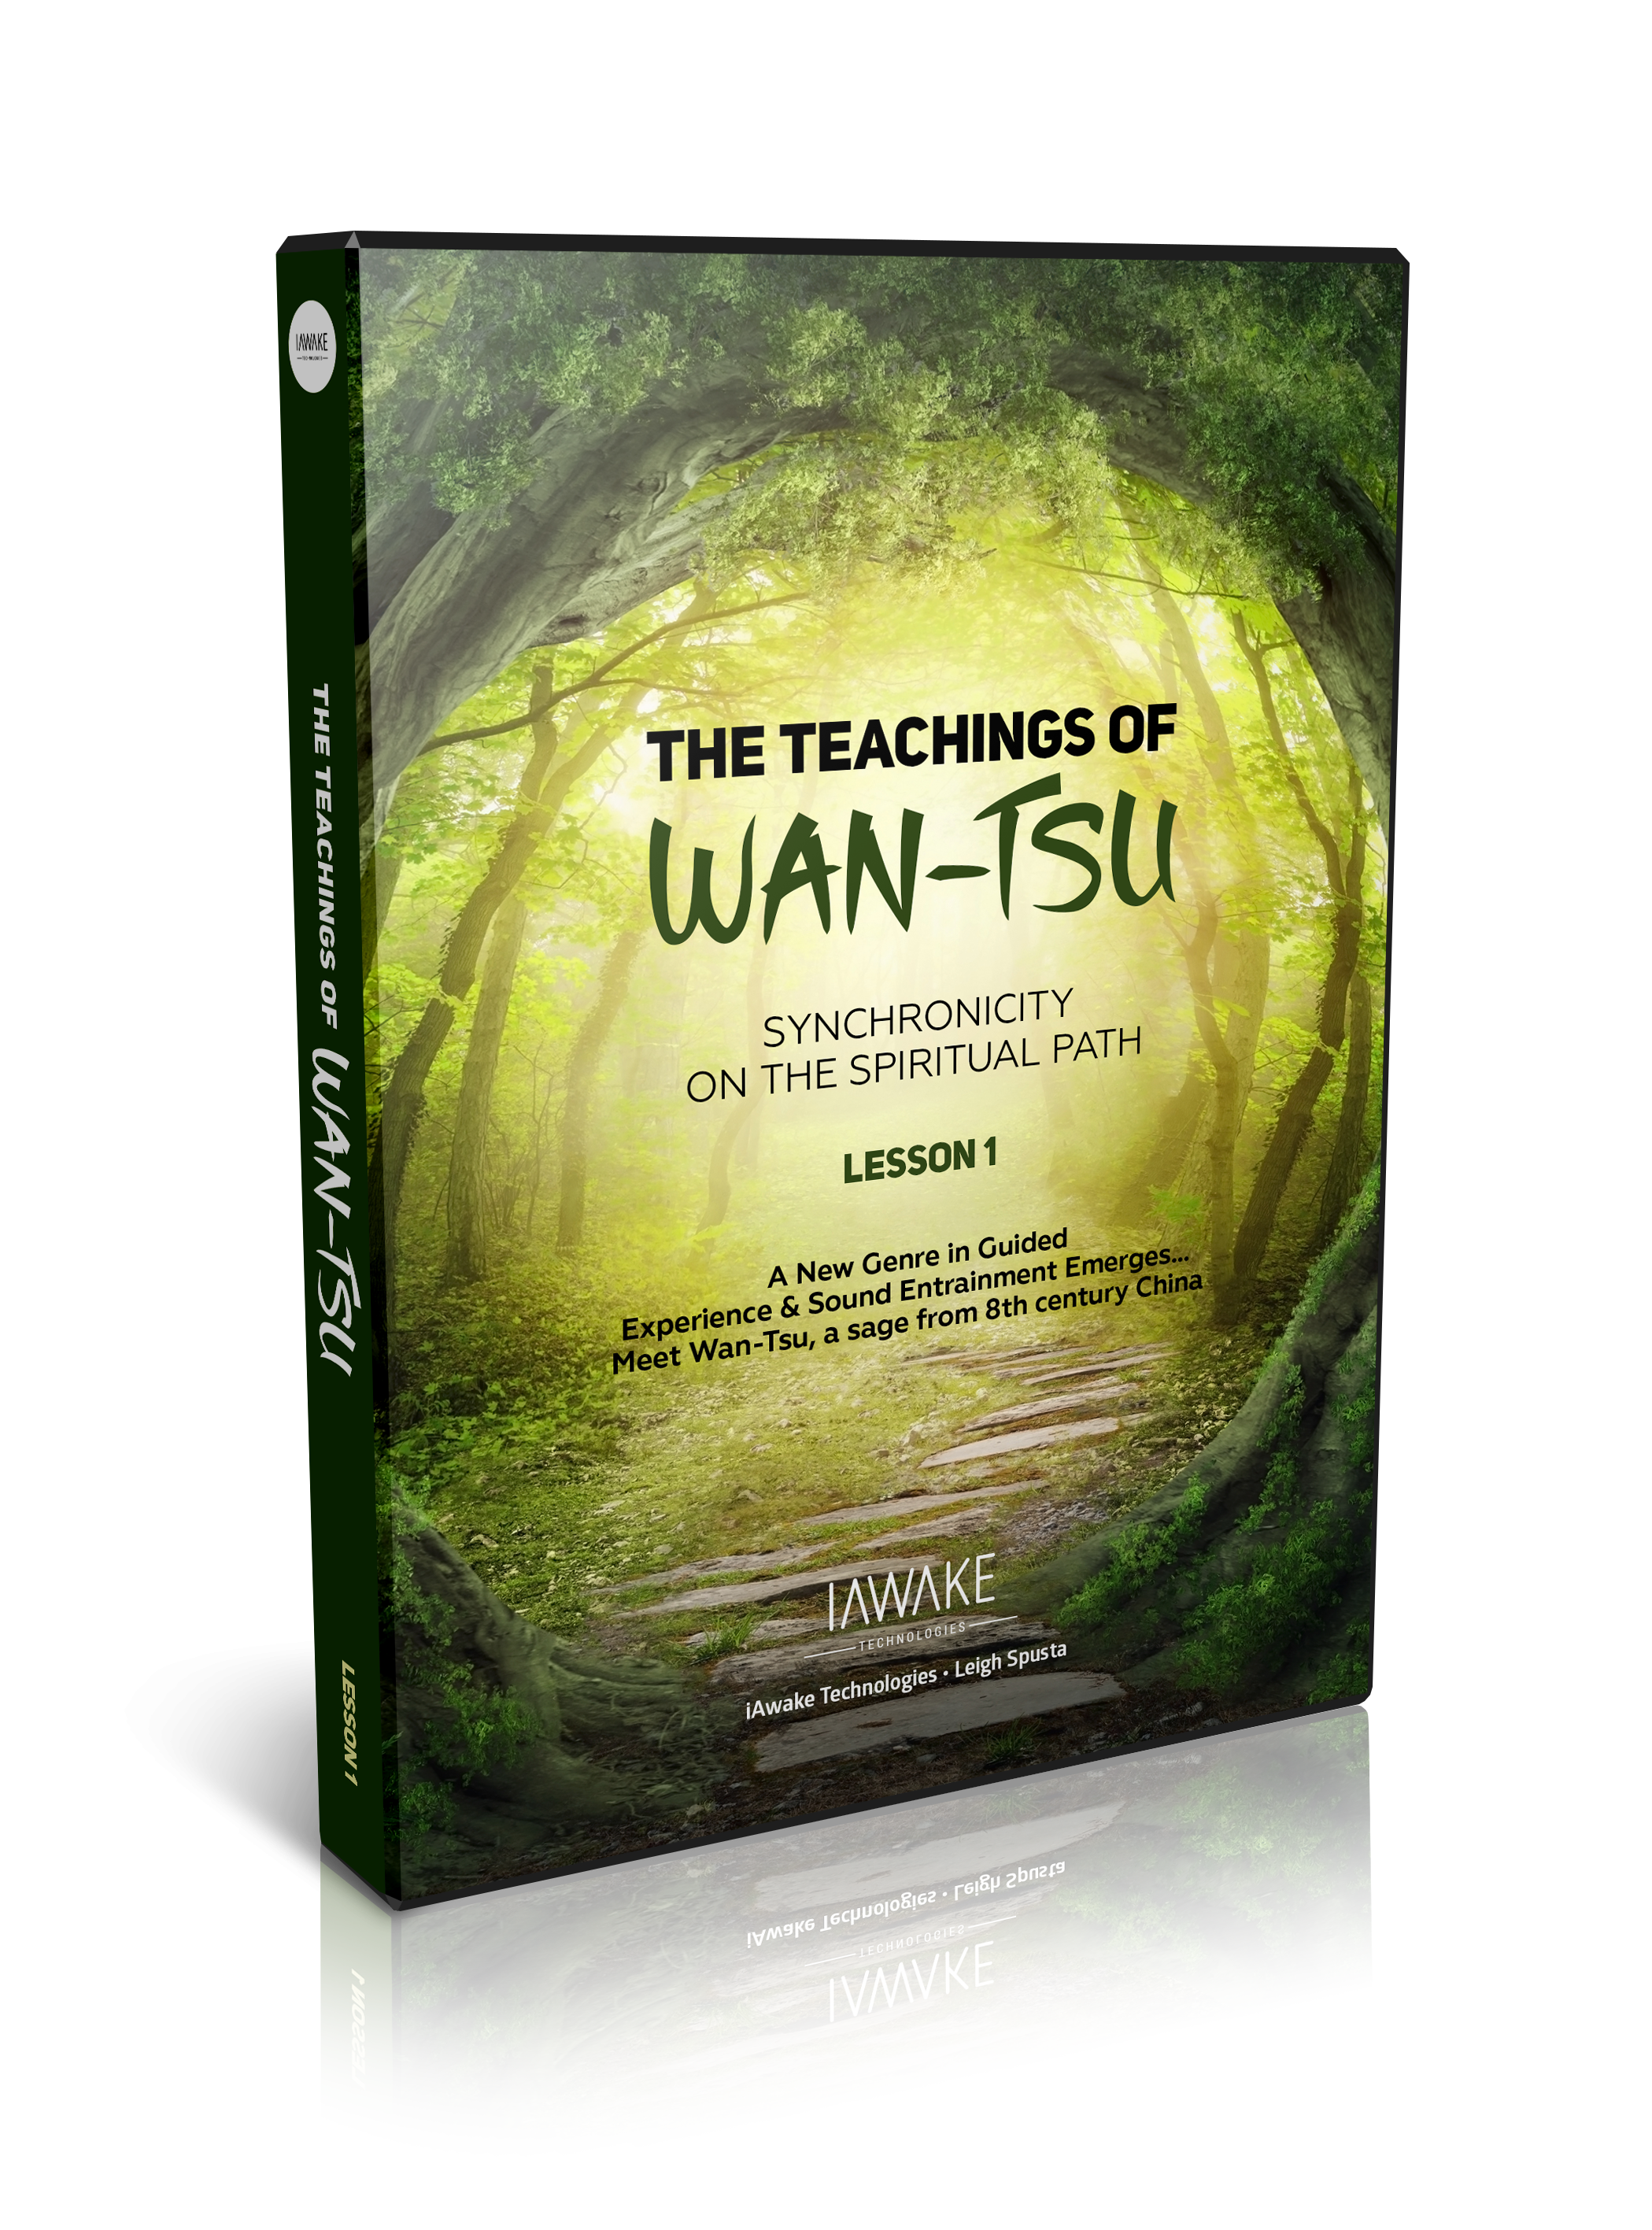 The Teachings of Wan Tsu! Emerging New Genre in Guided Experience...